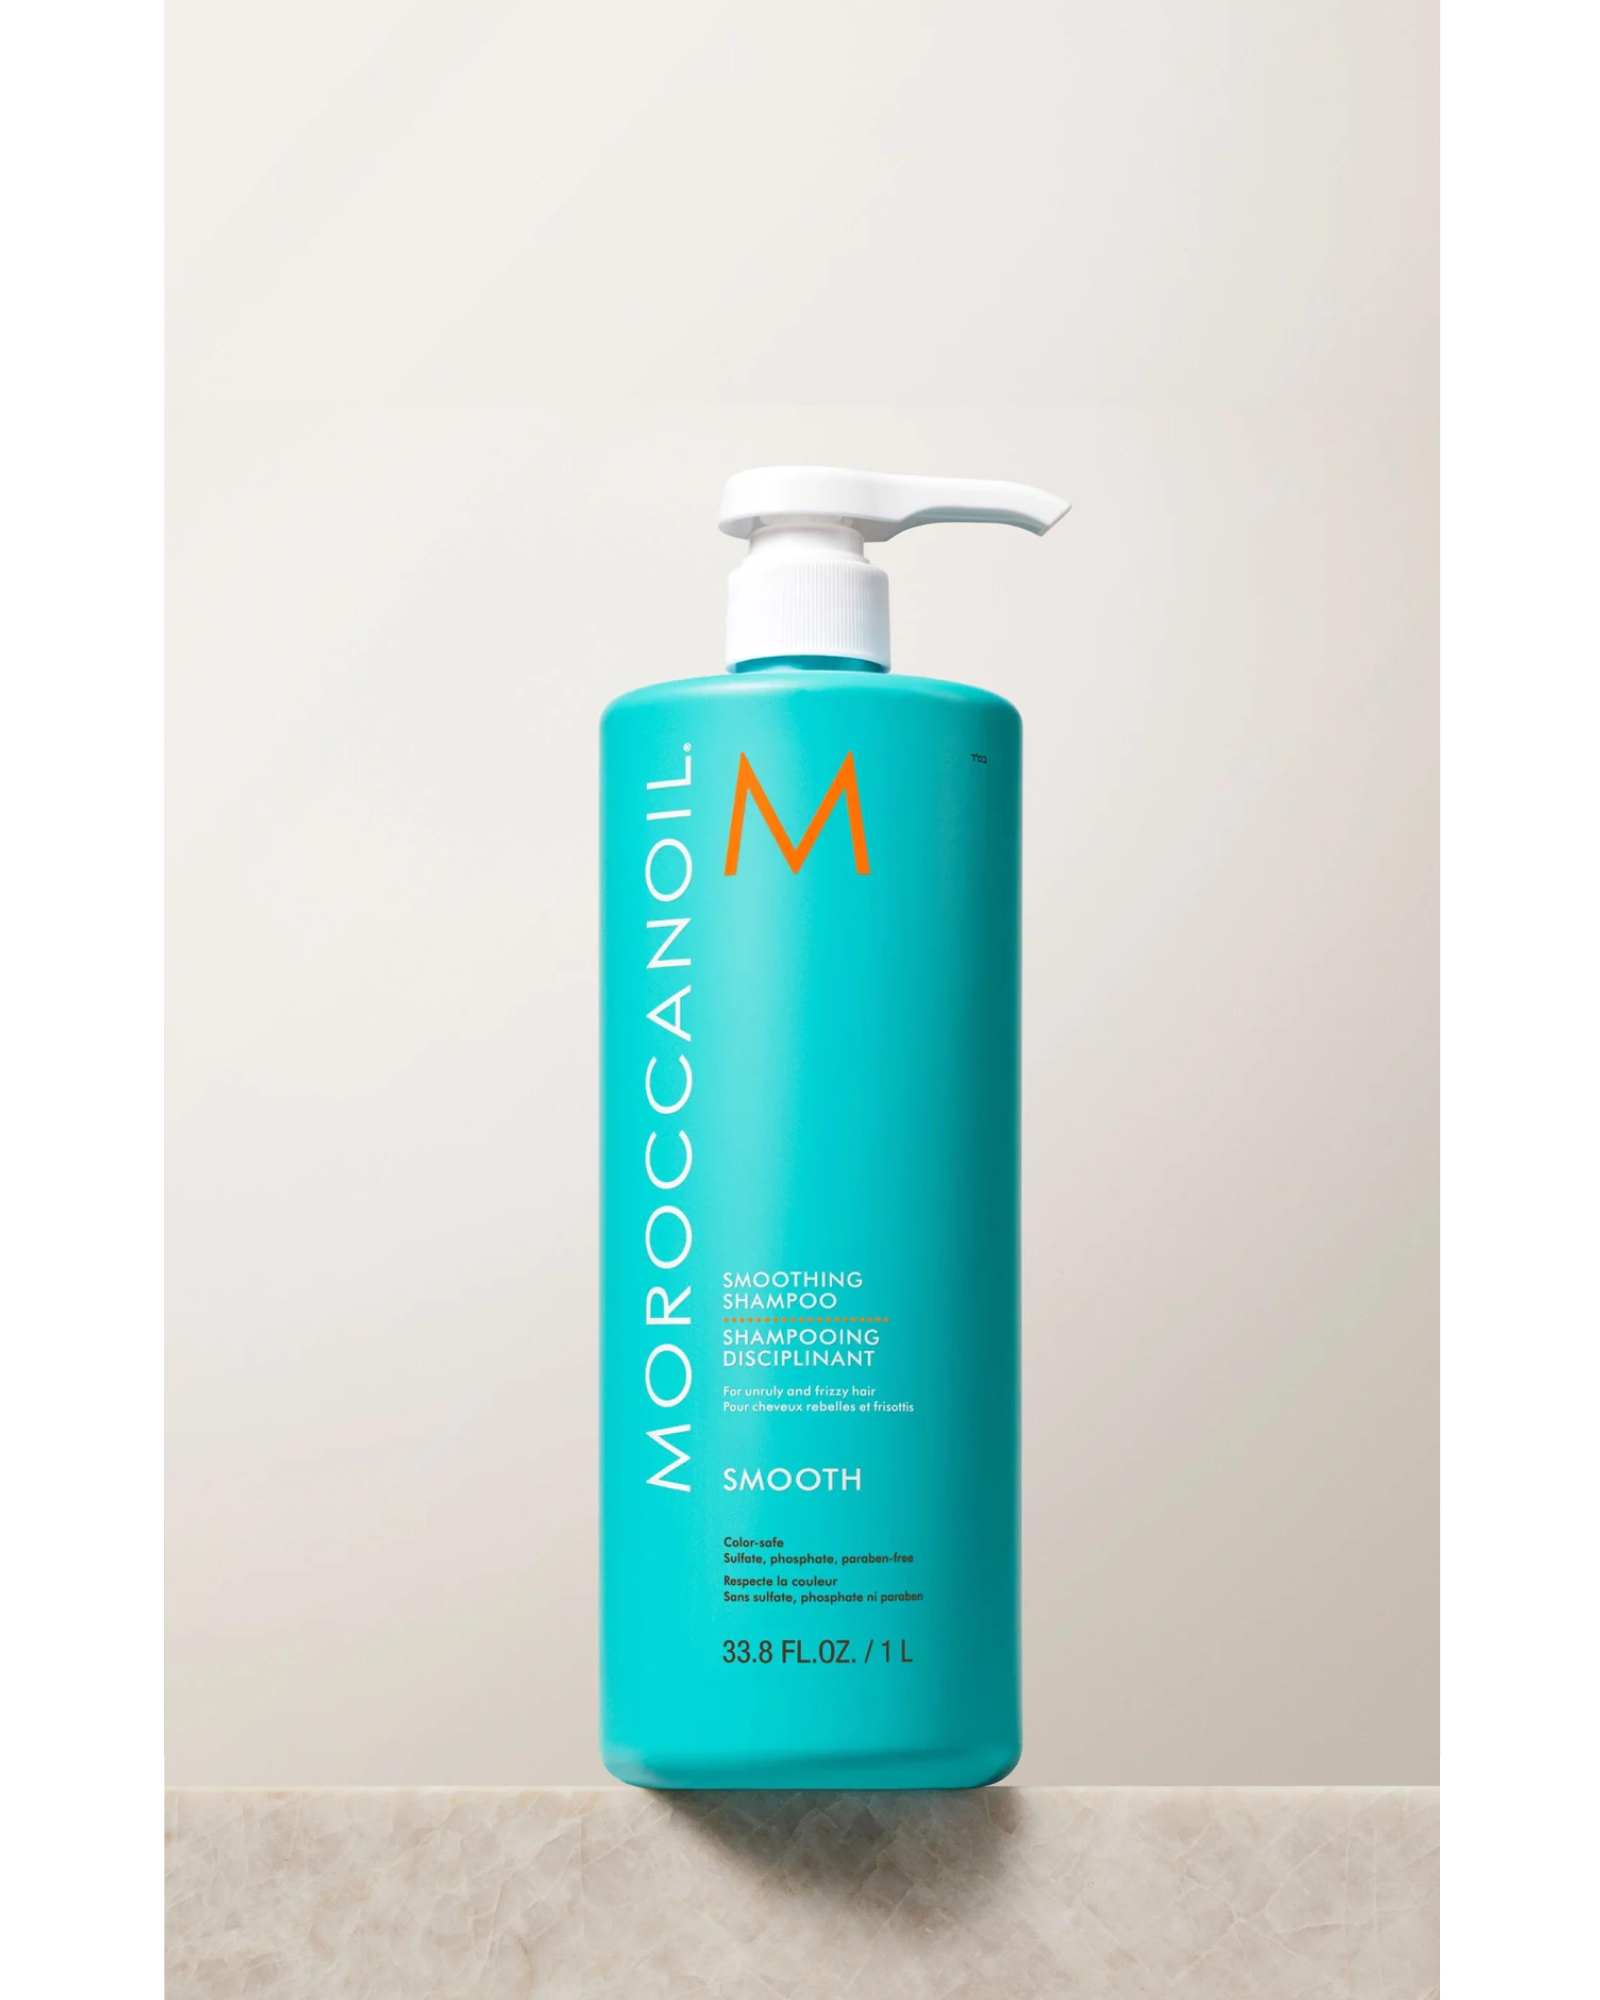 Увлажняющий шампунь от MoroccanOil (MoroccanOil Smoothing Shampoo)